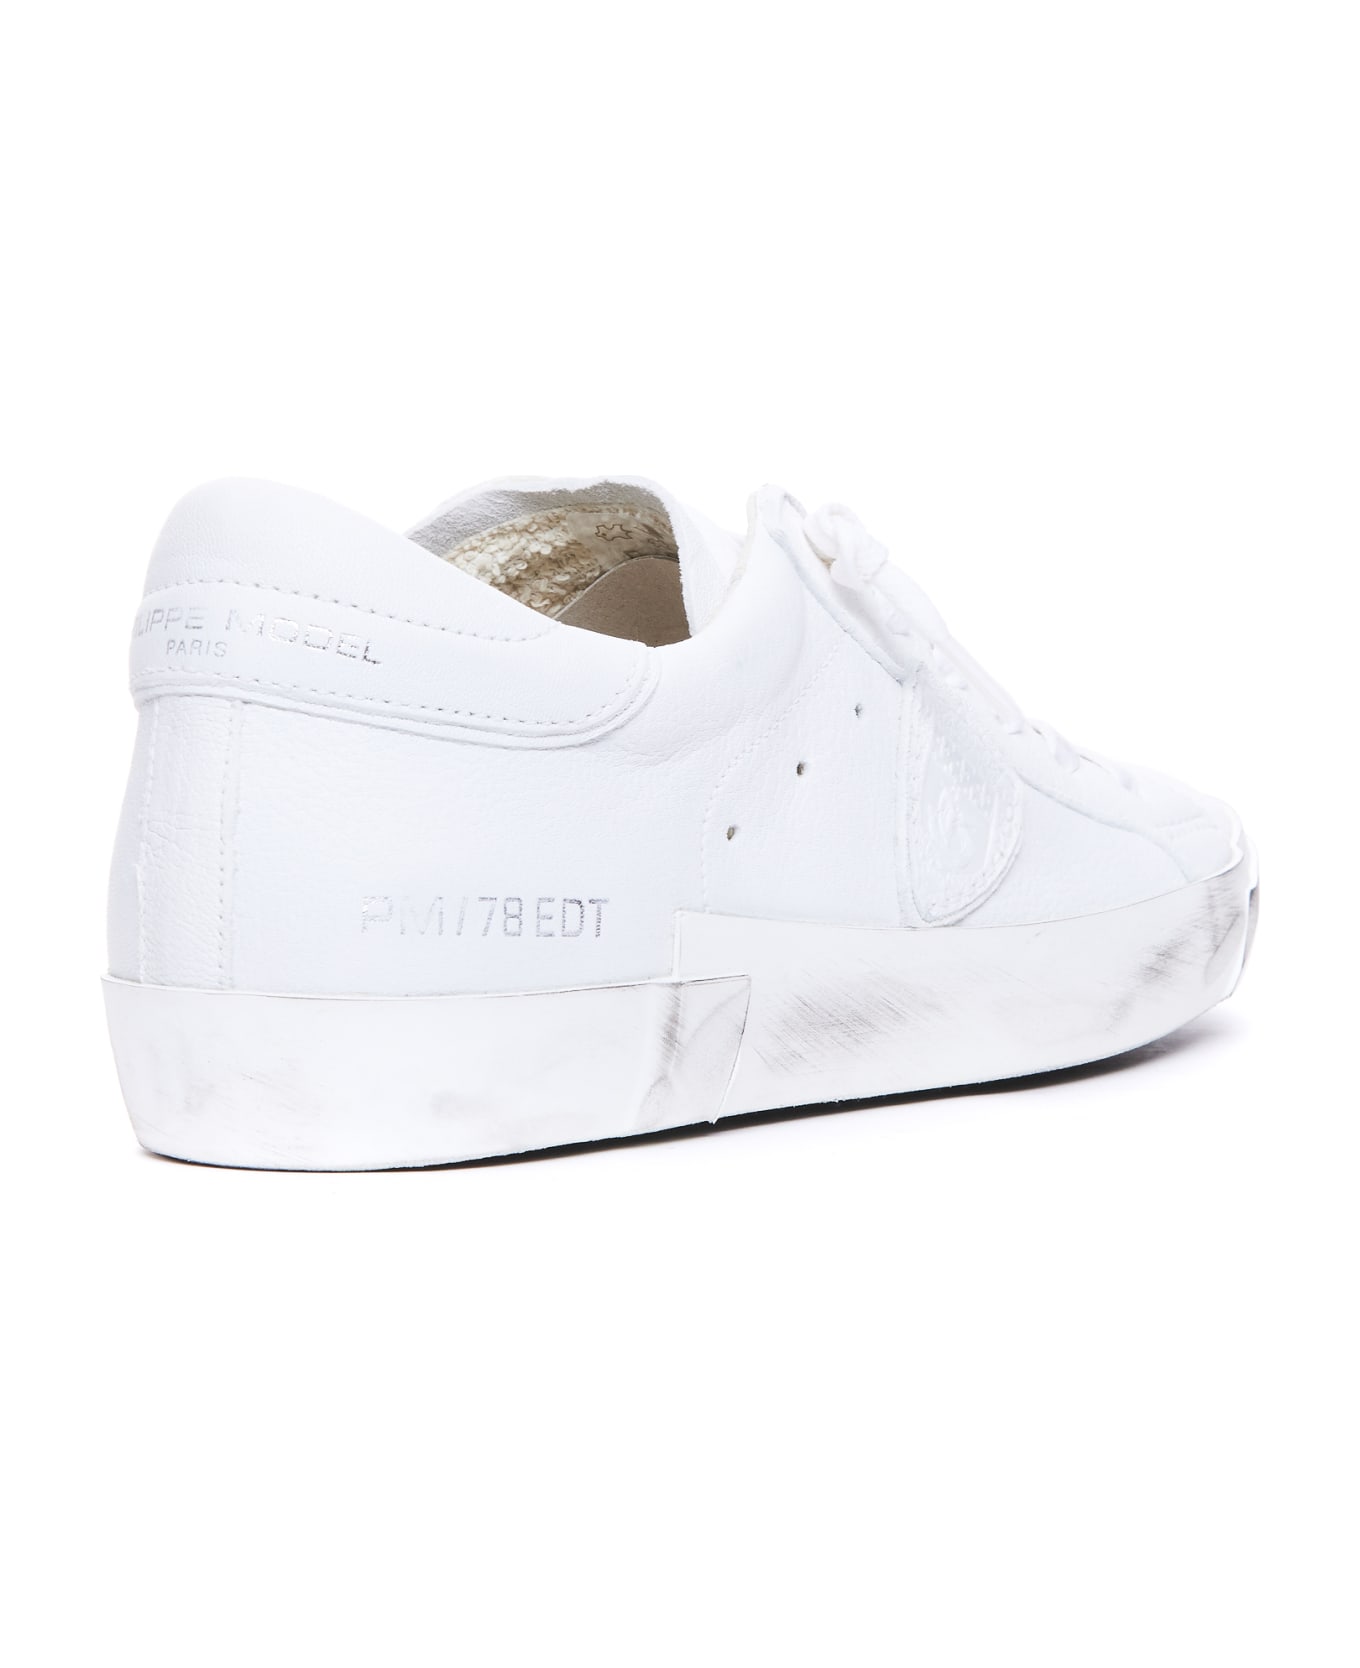 Philippe Model Prsx Sneakers - White